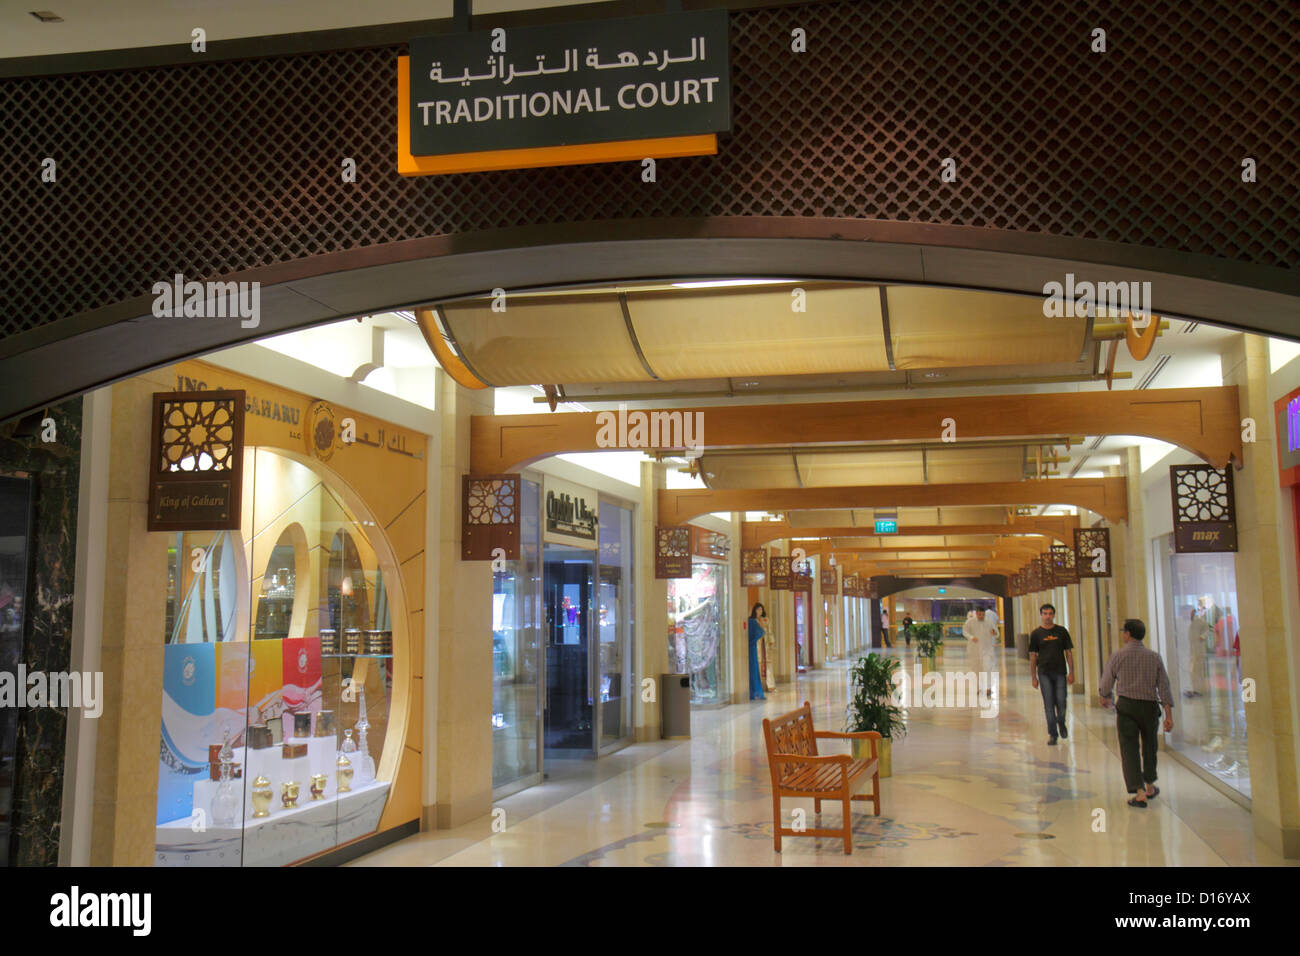 Dubai UAE,United Arab Emirates,Deira,Al Rigga,Al Ghurair Centre,shopping shopper shoppers shop shops market markets marketplace buying selling,retail Stock Photo